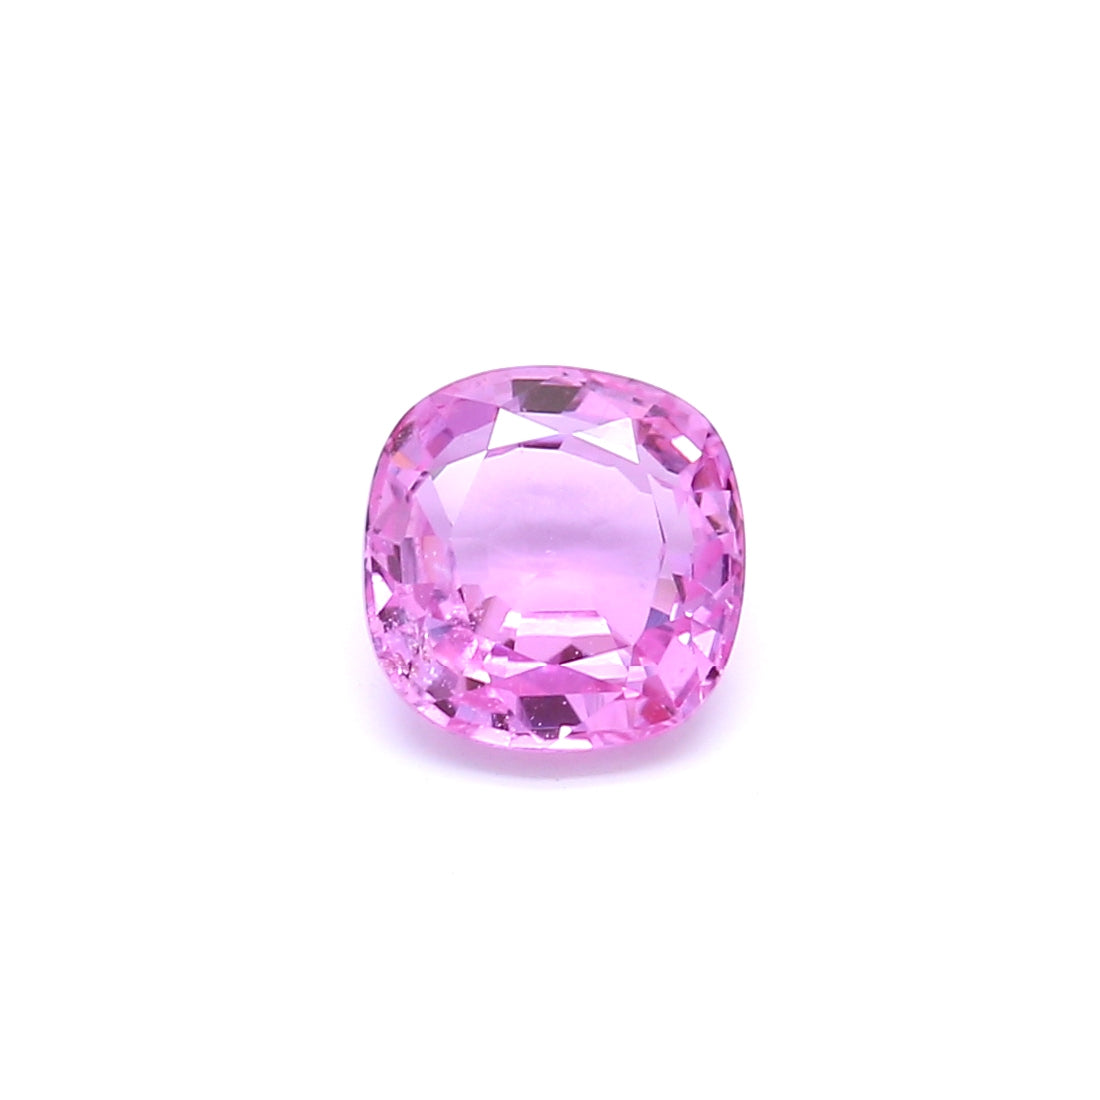 1.45ct Pink, Cushion Sapphire, Heated, Madagascar - 6.69 x 6.46 x 3.34mm